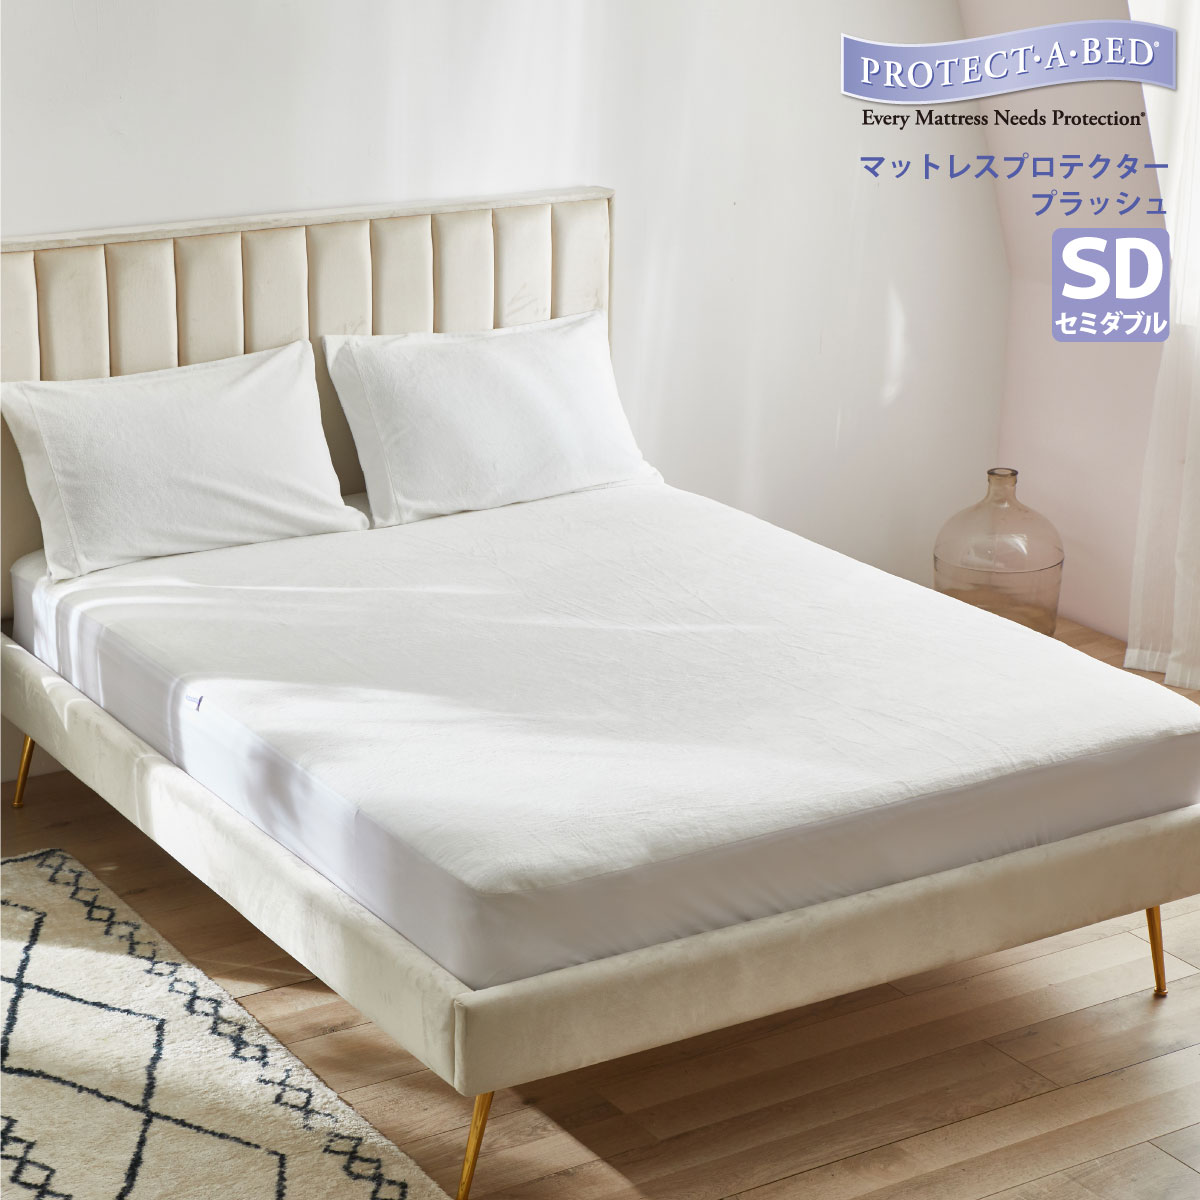 protect-a-bed premium crib mattress protector